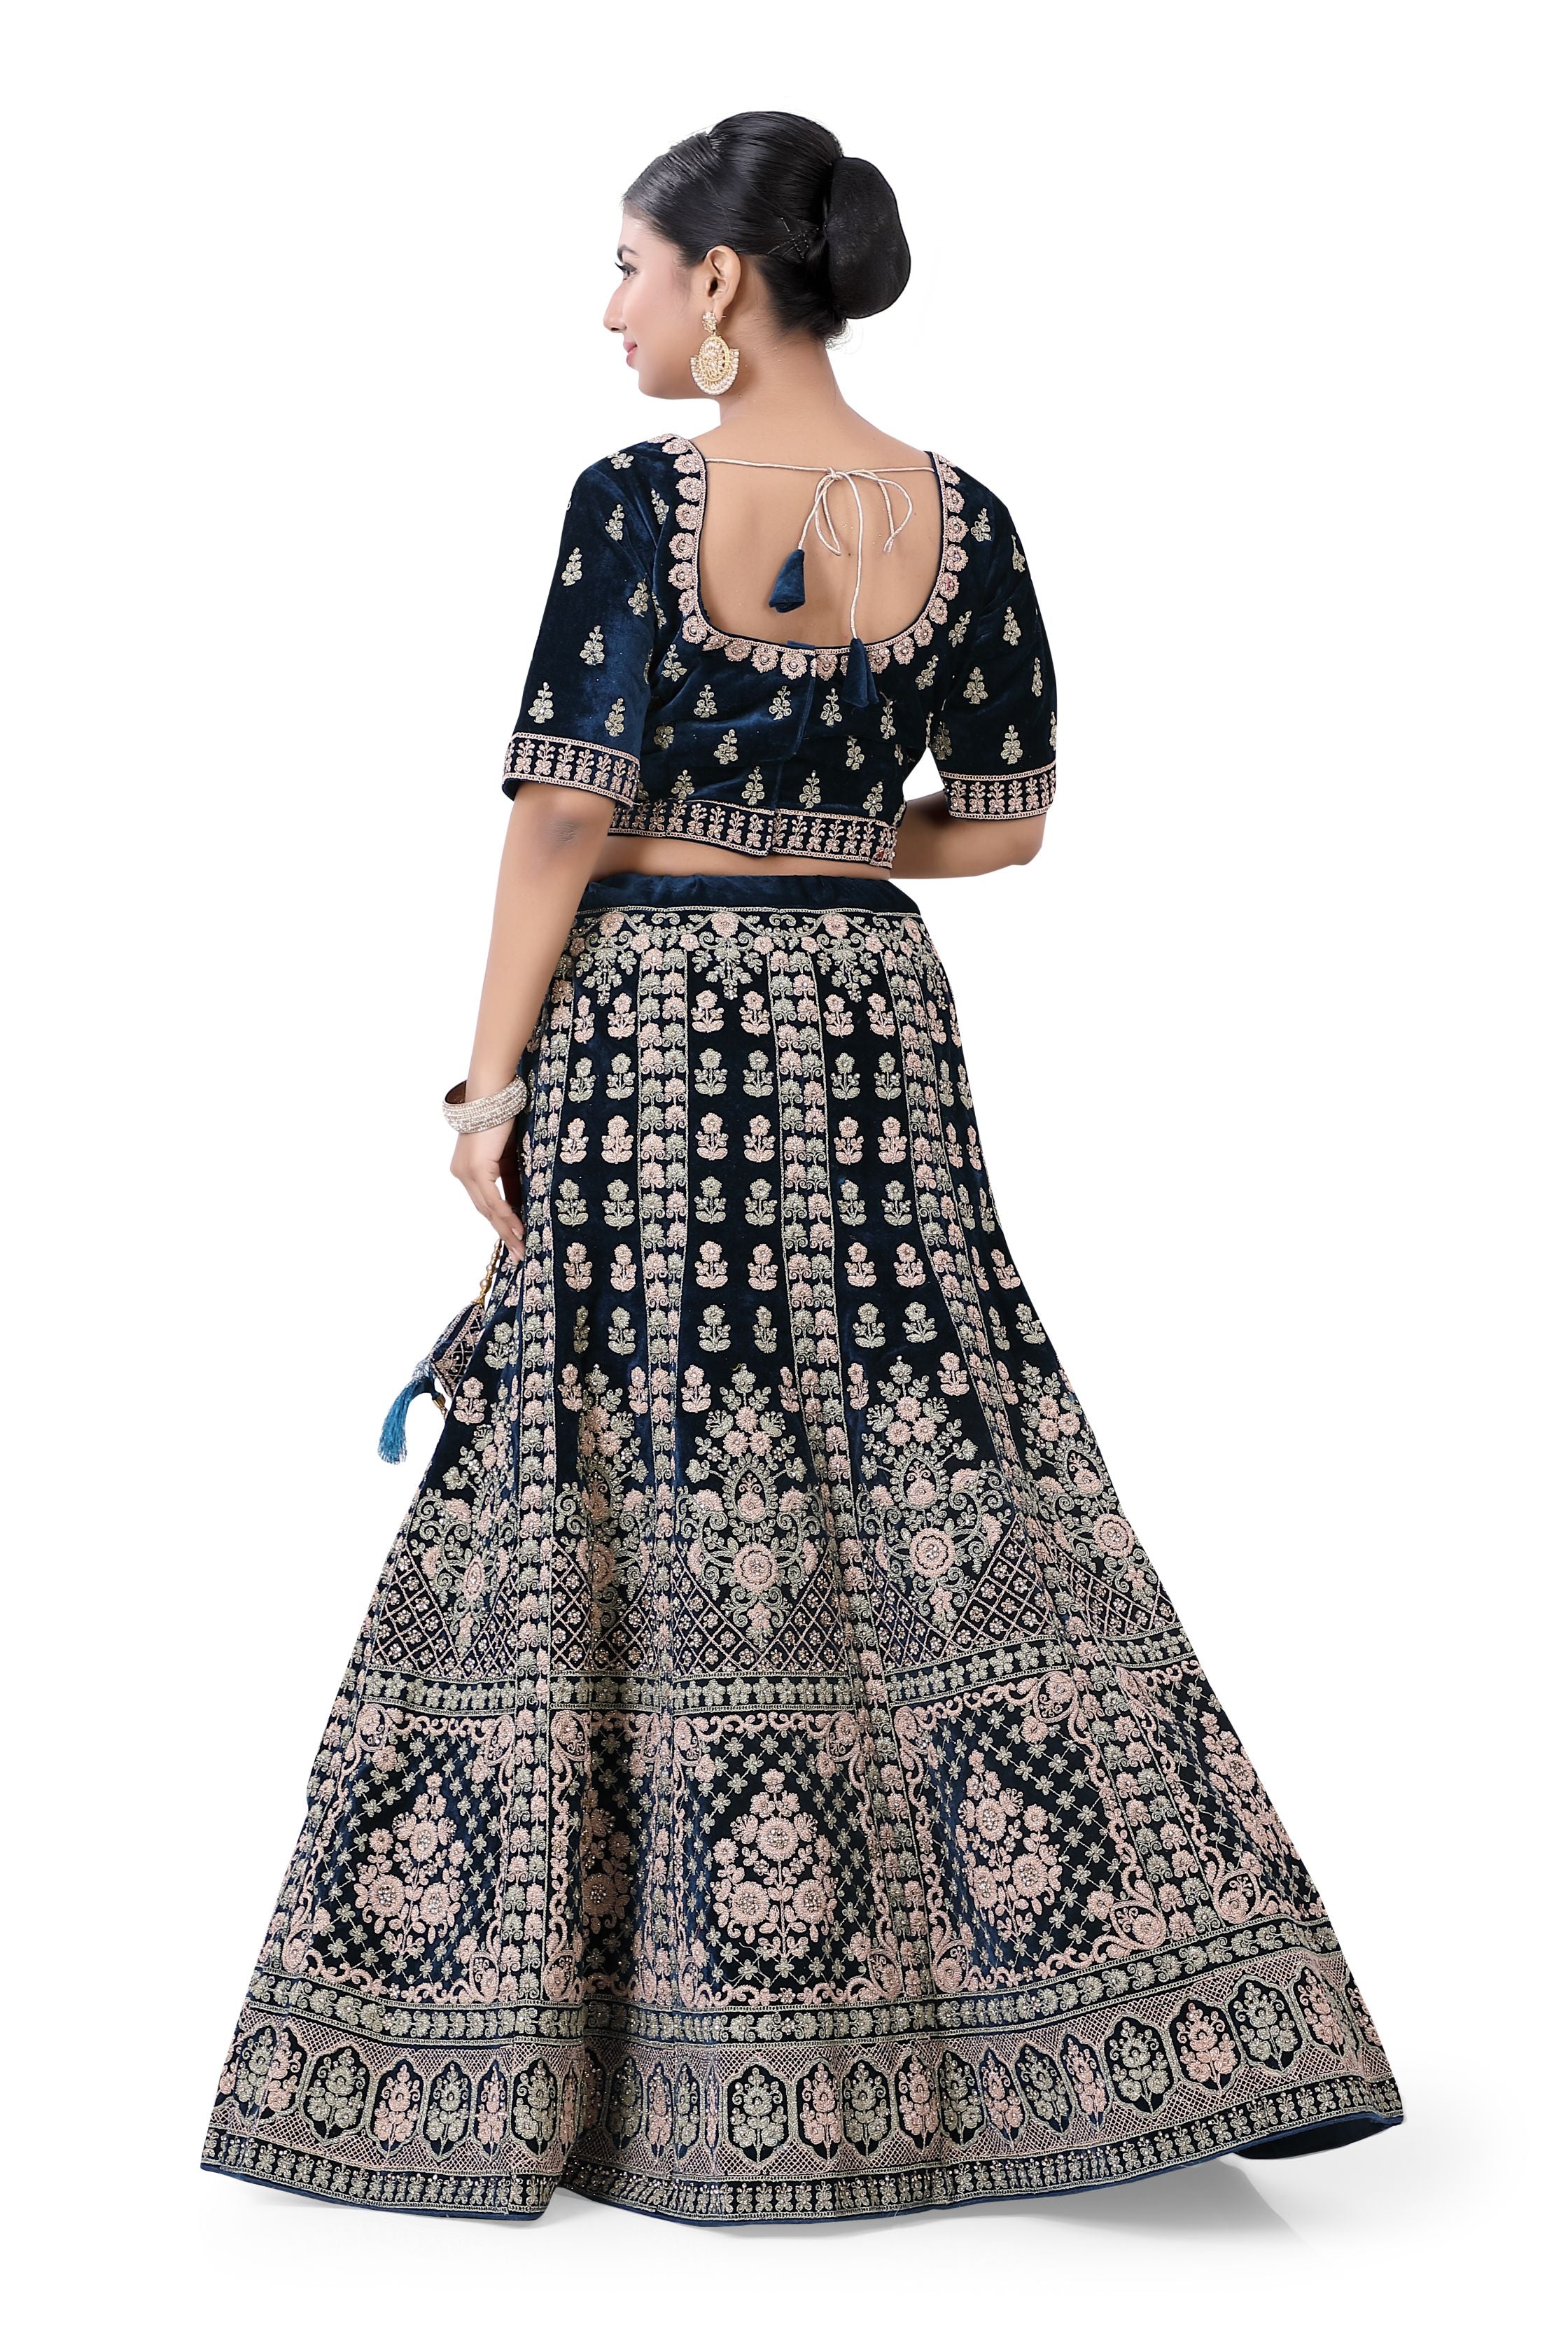 Peacock Blue Lehenga Choli-Velvet - Premium Bridal lehenga from Dulhan Exclusives - Just $1350! Shop now at Dulhan Exclusives